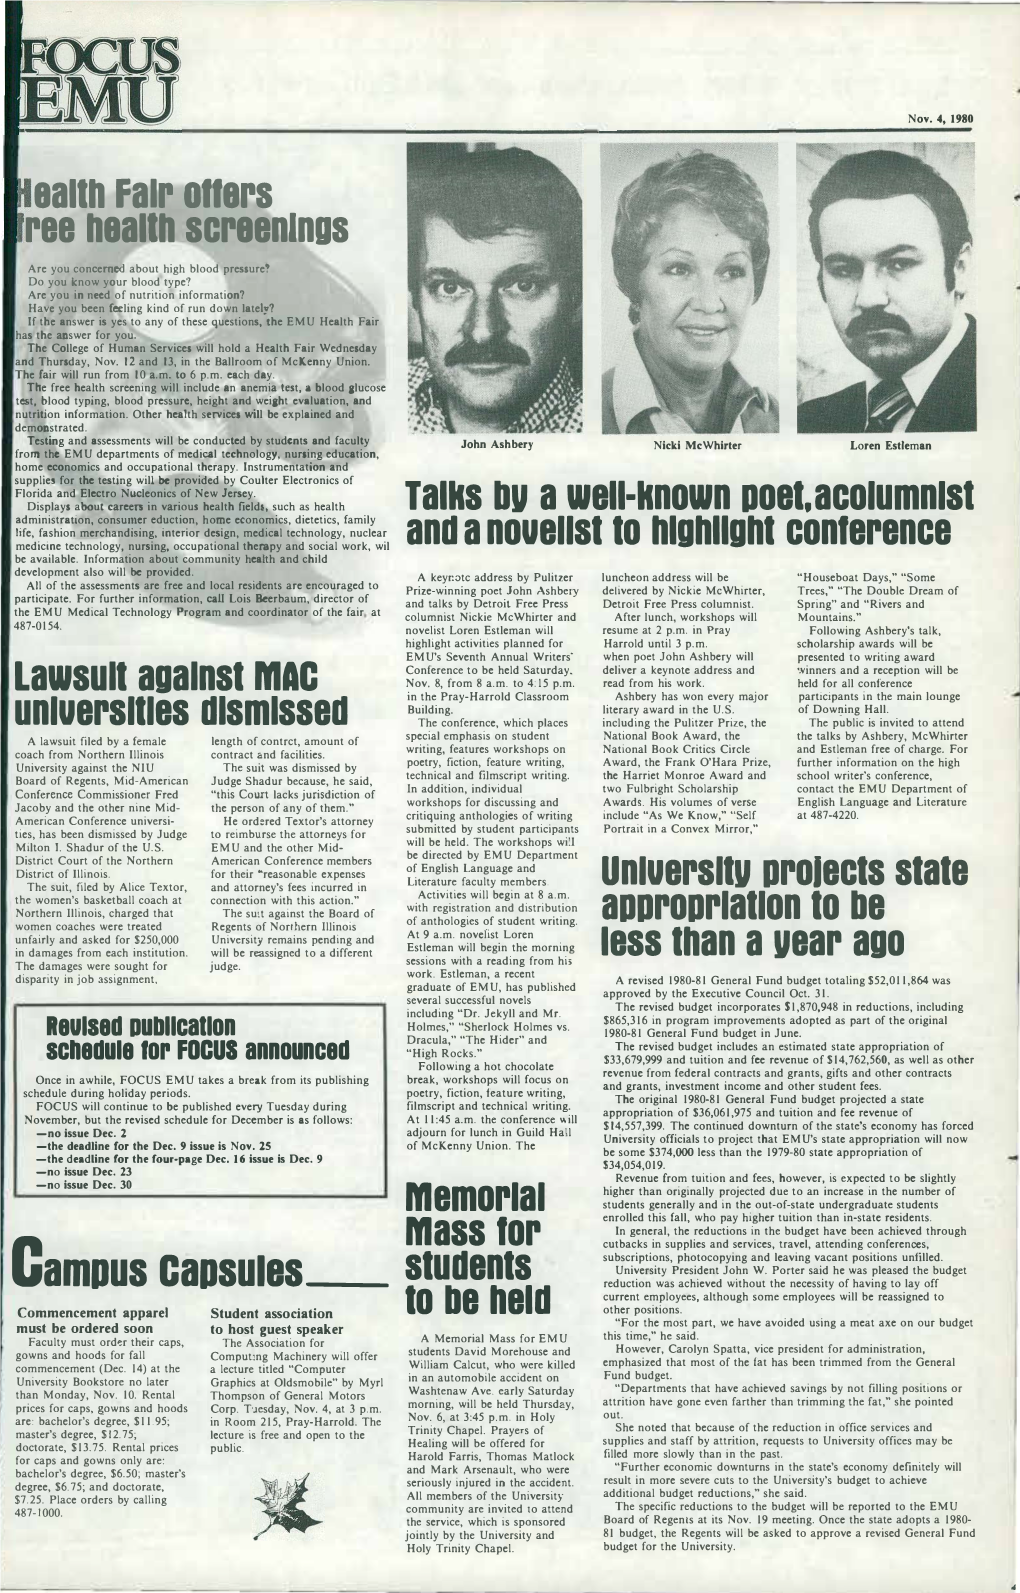 Focus EMU, November 4, 1980